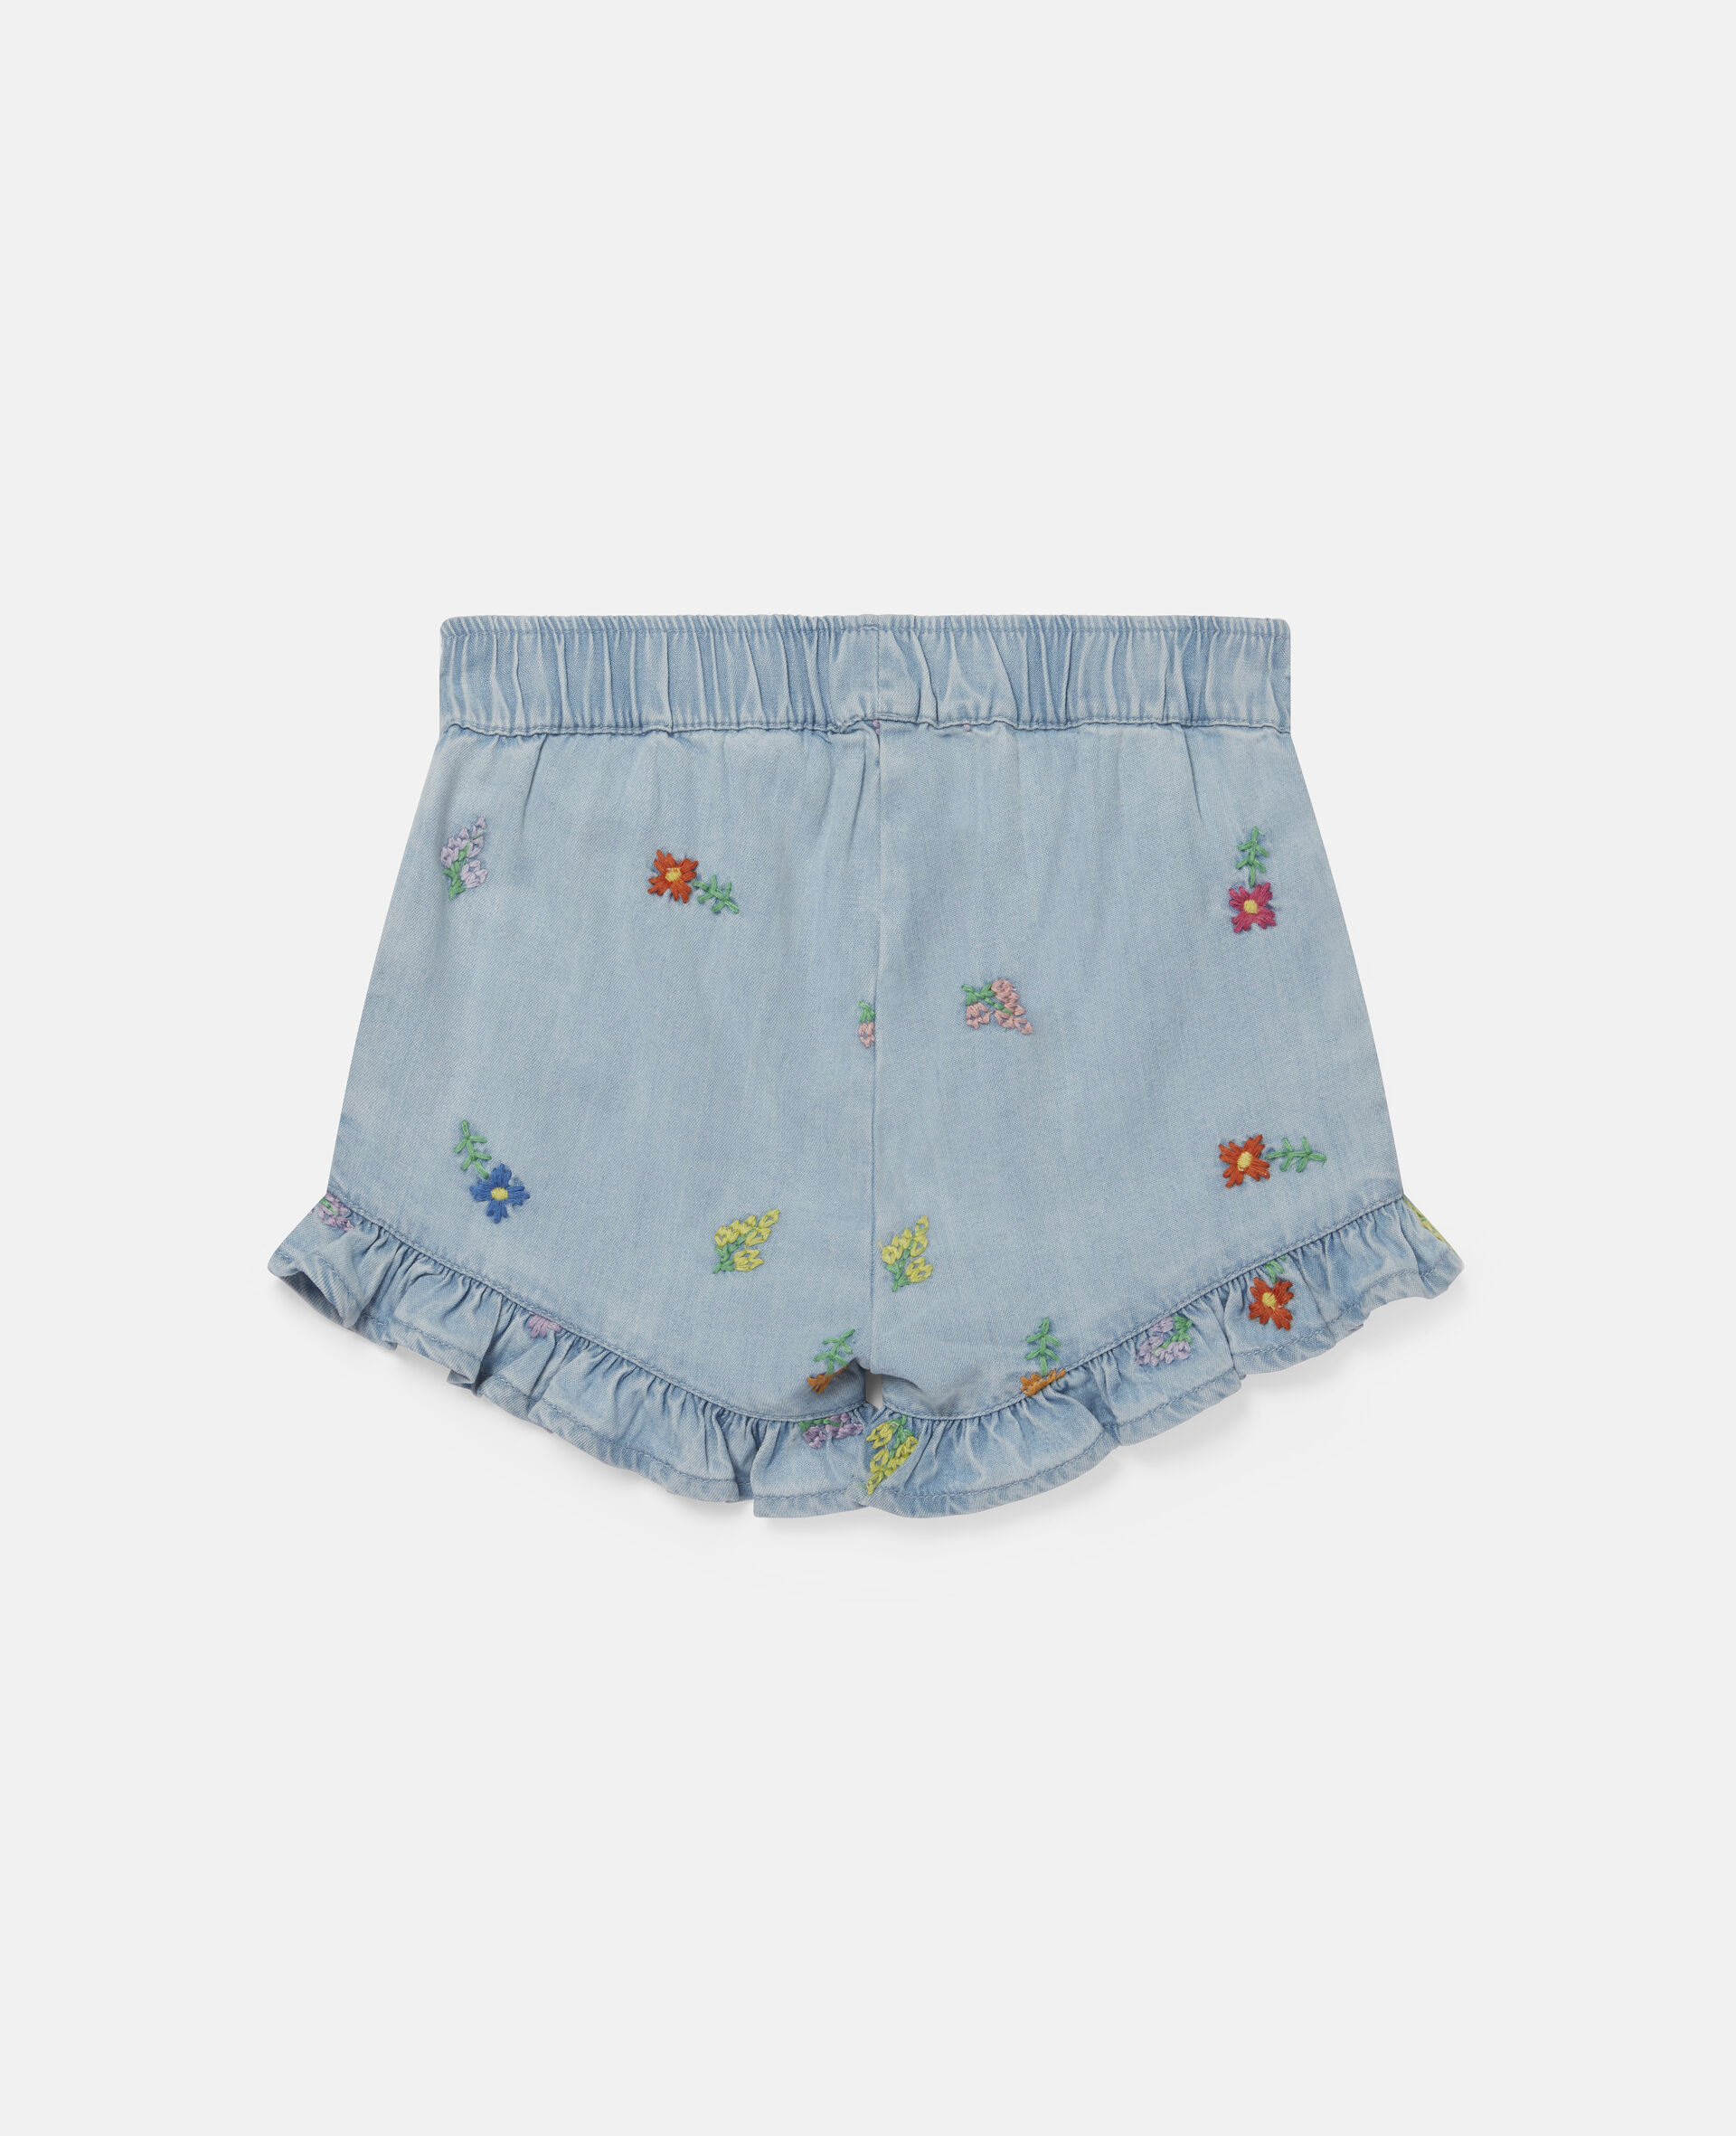 Embroidered Flowers Denim Shorts-Blue-large image number 3